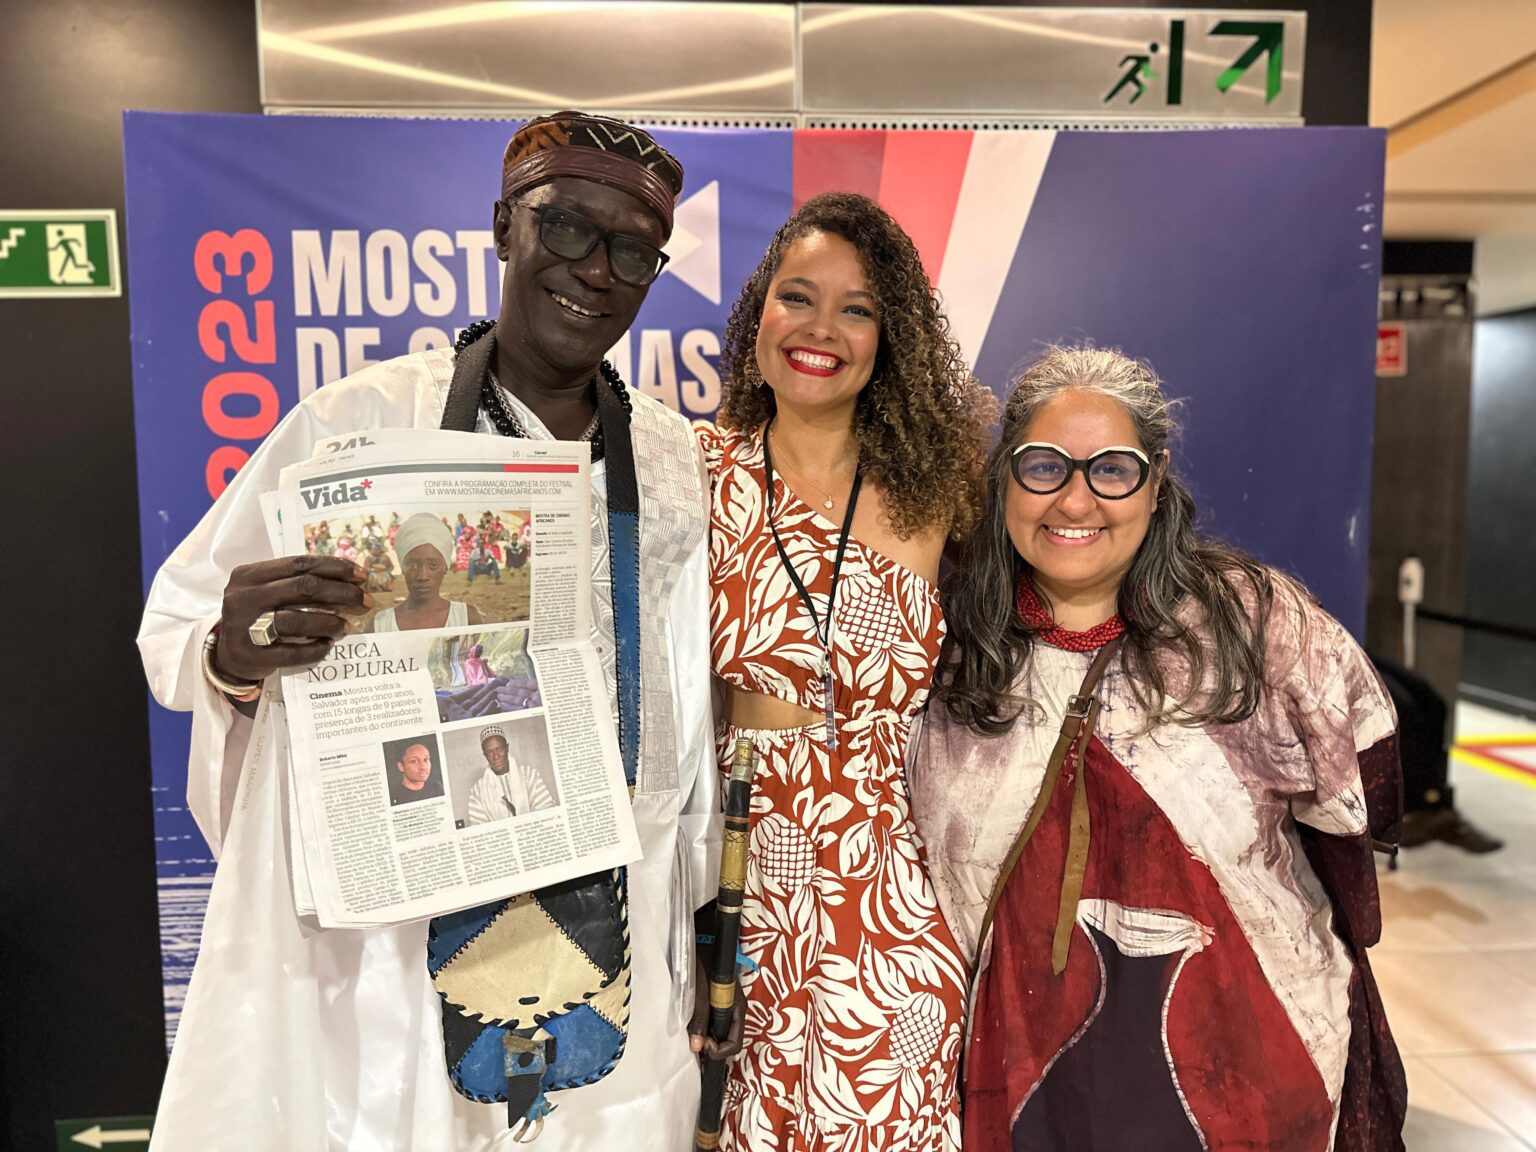 Moussa Sene Absa with the newspaper, Gisele Santana and Ana Camila (Mamadou Diop)